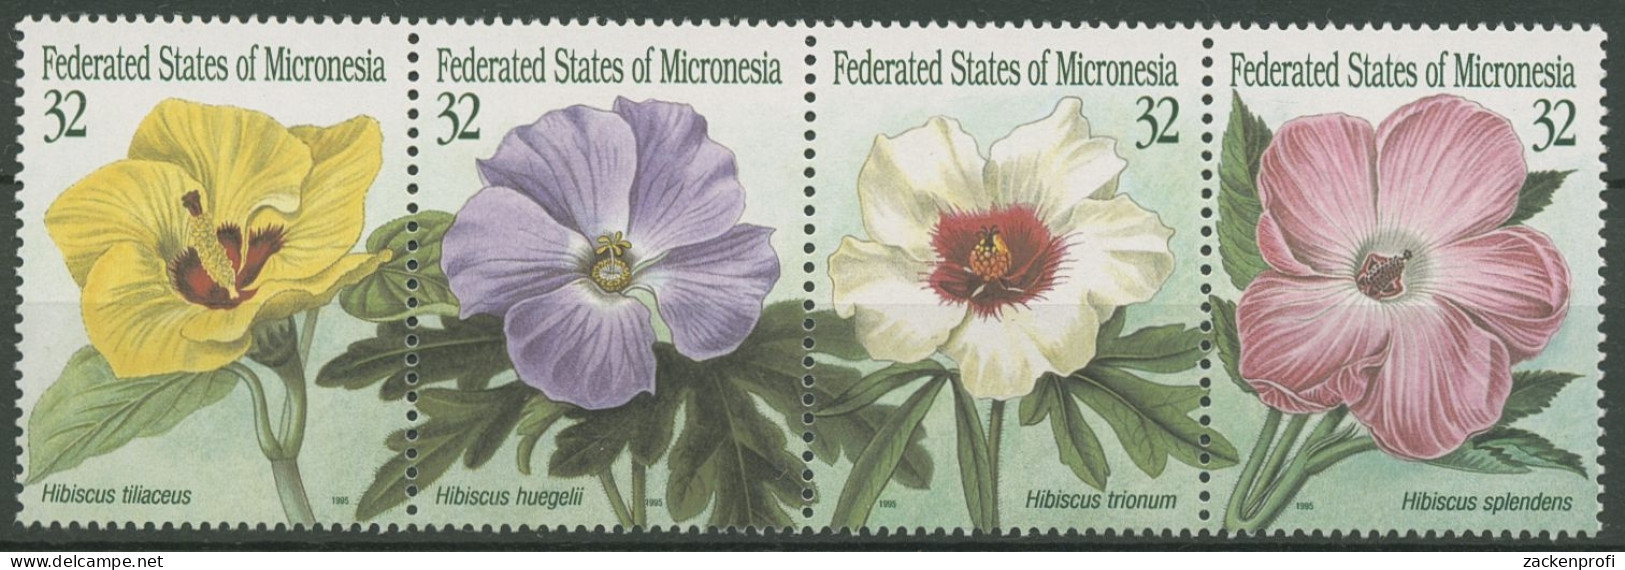 Mikronesien 1995 Hibiskusblüten 422/25 ZD Postfrisch (C74203) - Micronesia